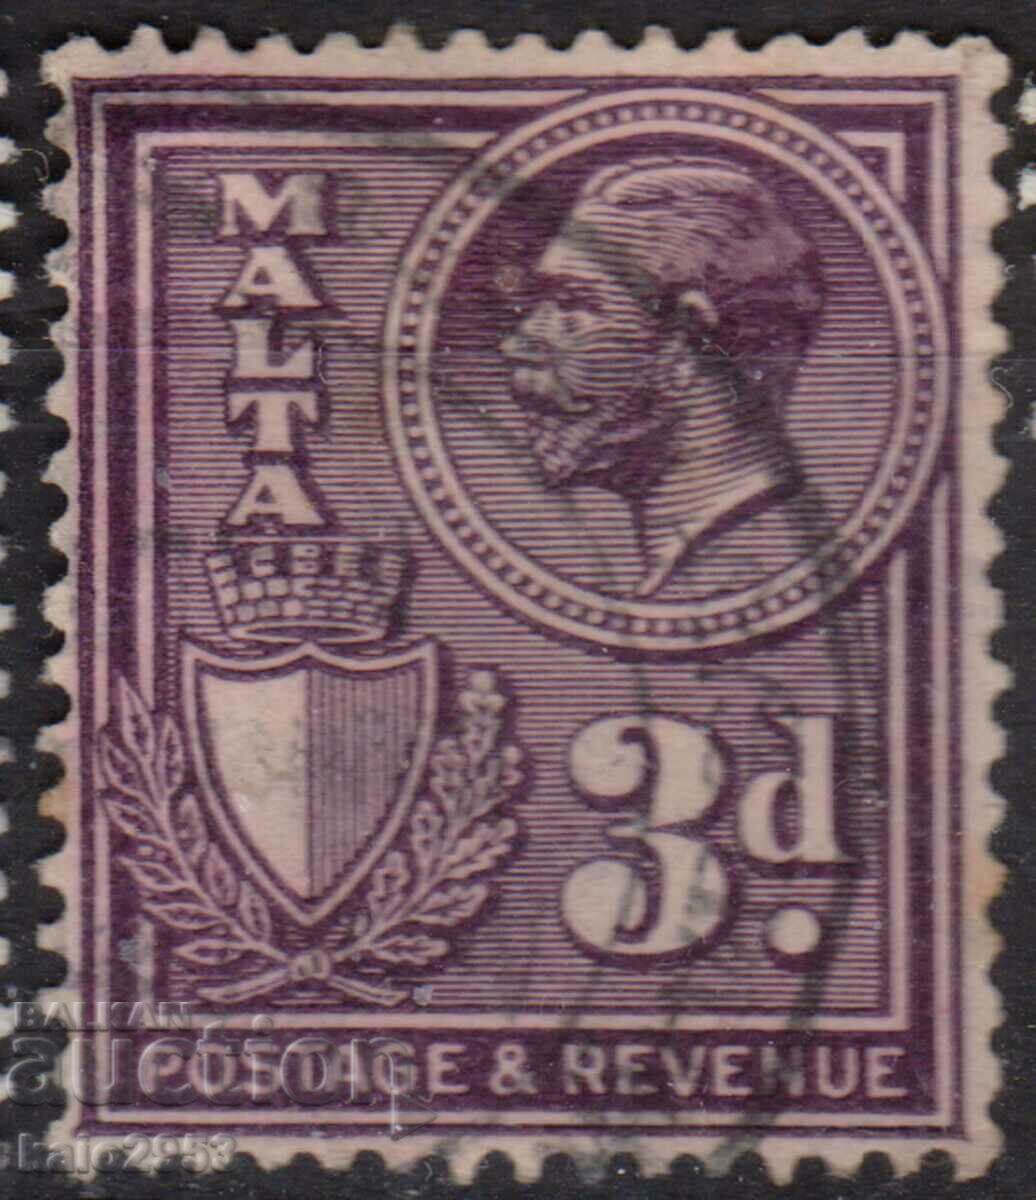 GB/Malta-1930-Редовна-KE V+герба-"Postage/Revenue",клеймо